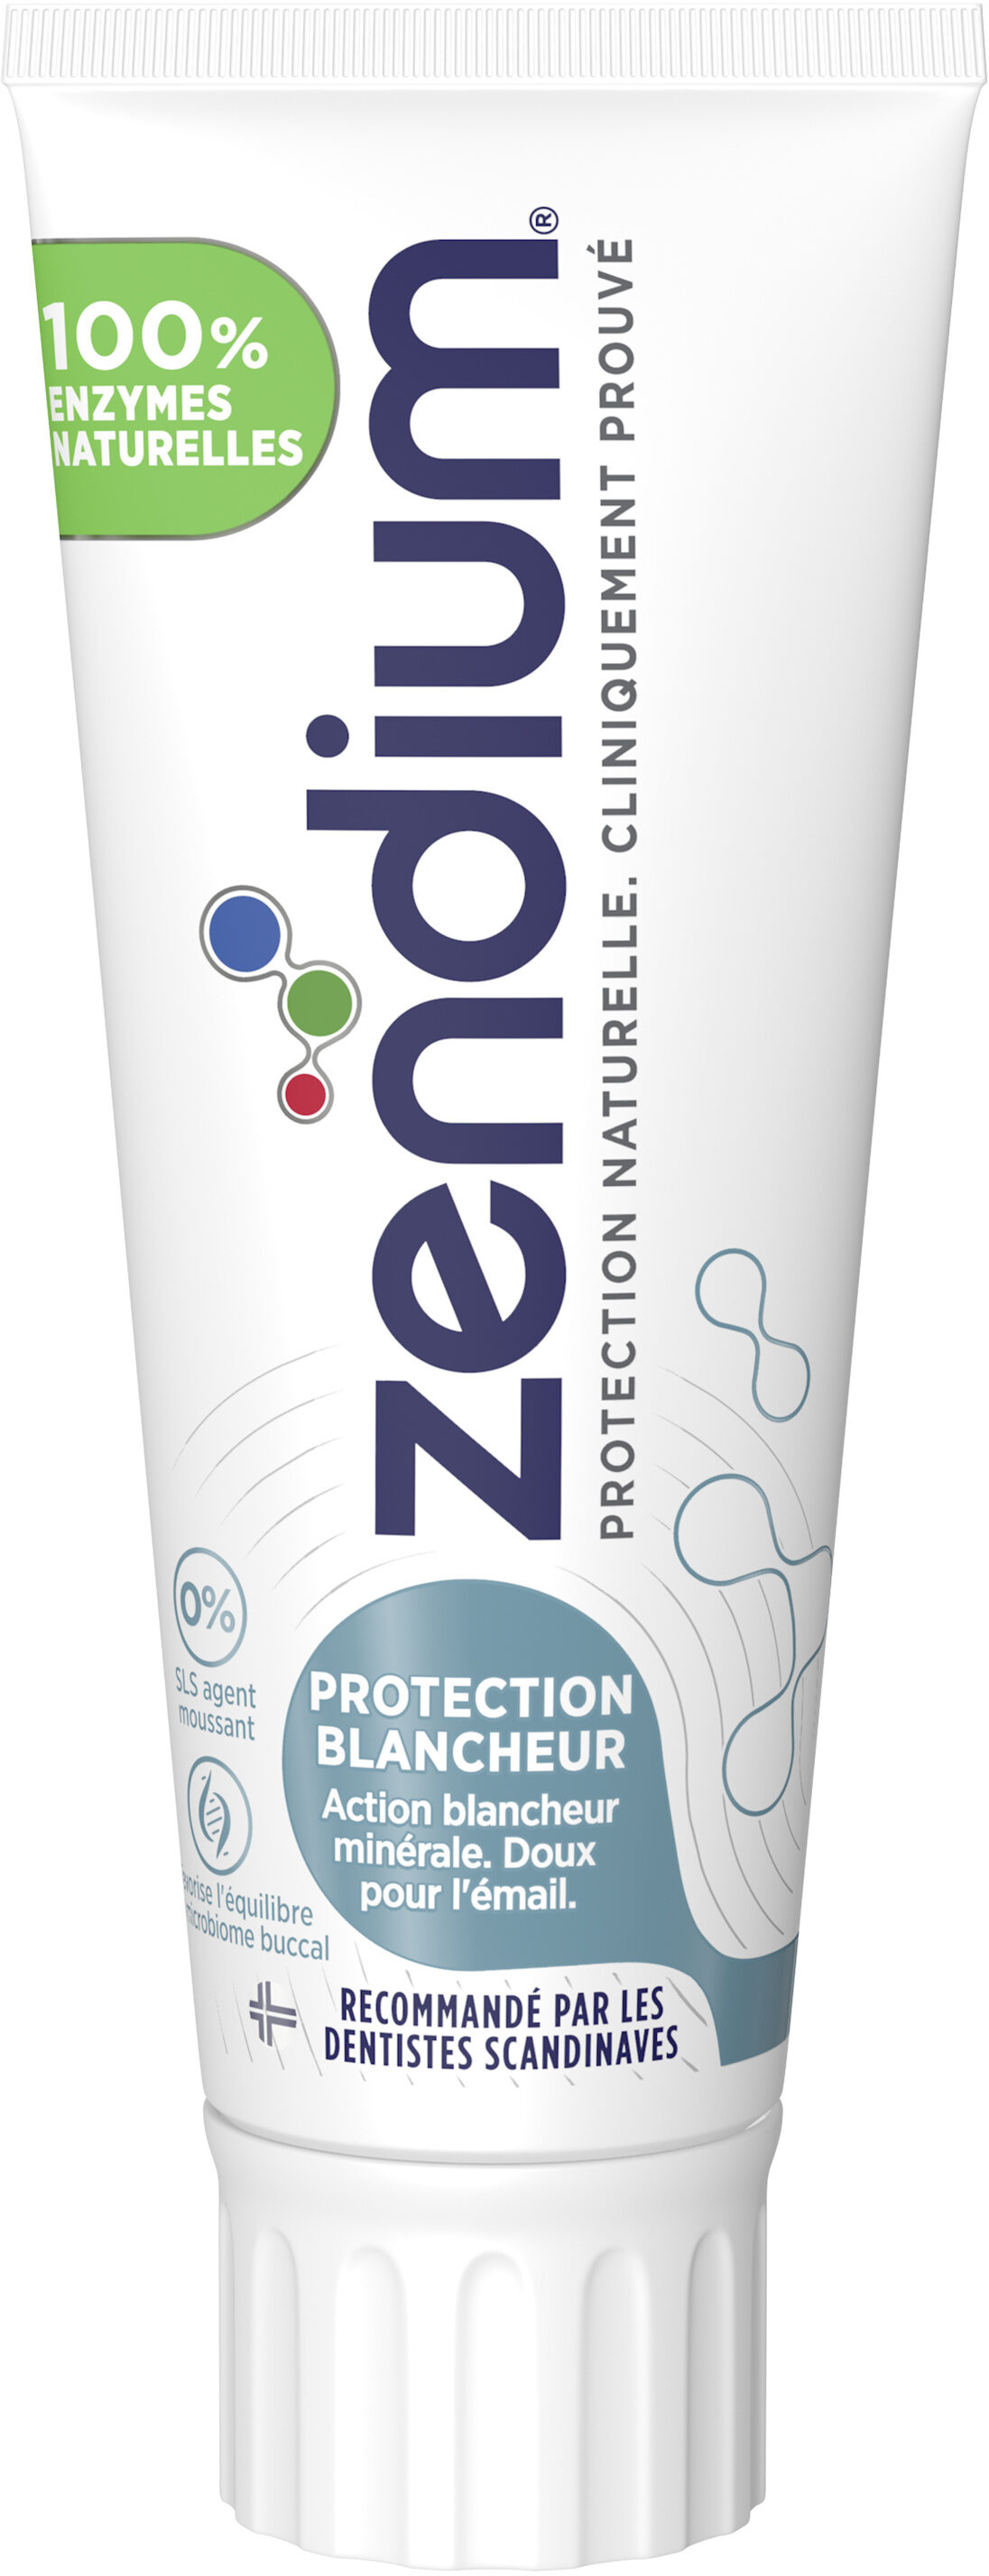 Zendium Dentifrice Protection Blancheur - Tuote - fr